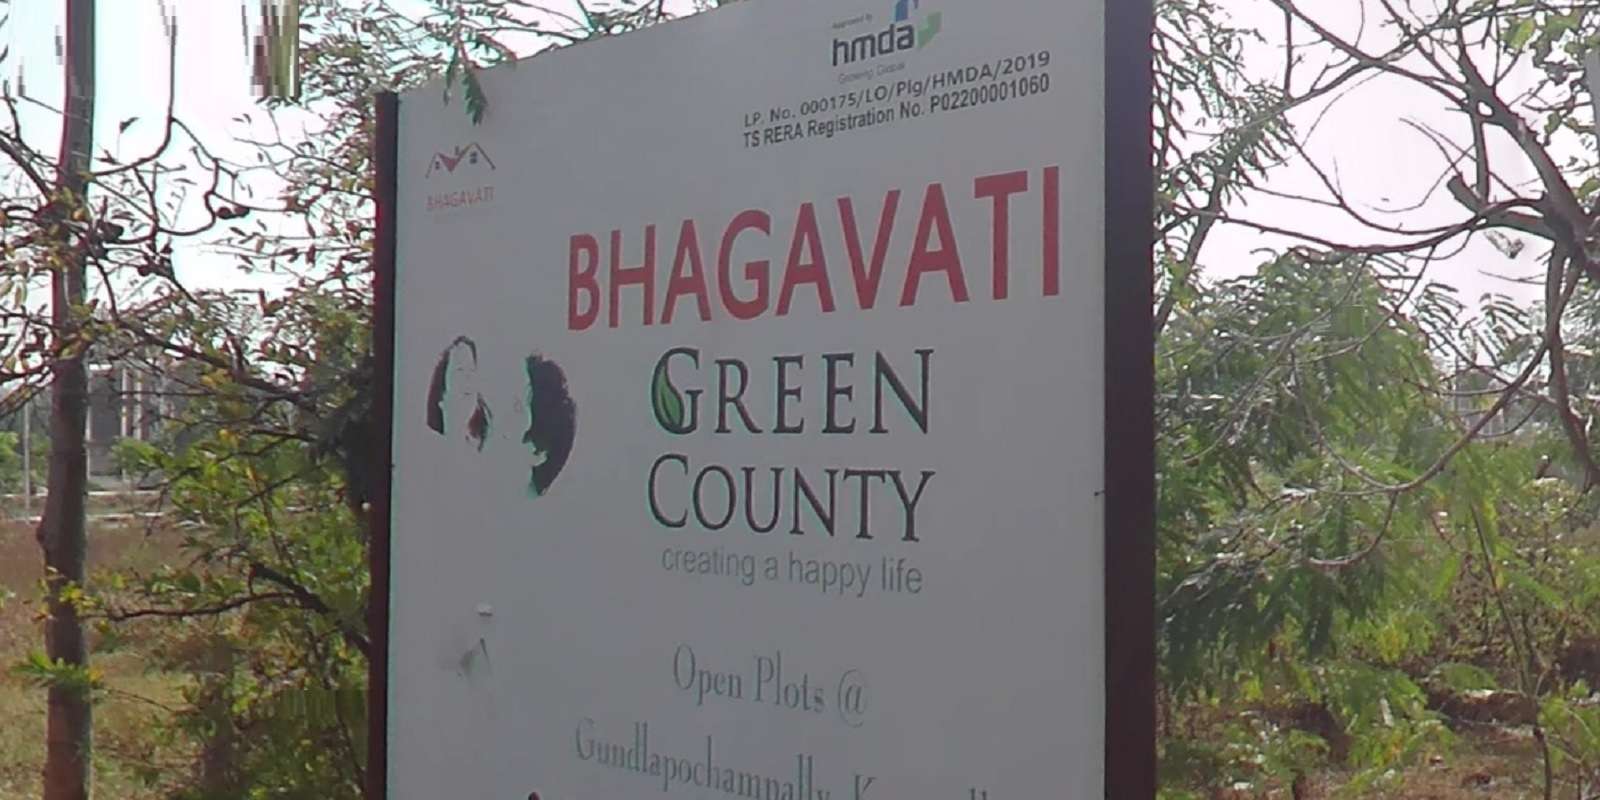 Bhagavati Green County Cover Image